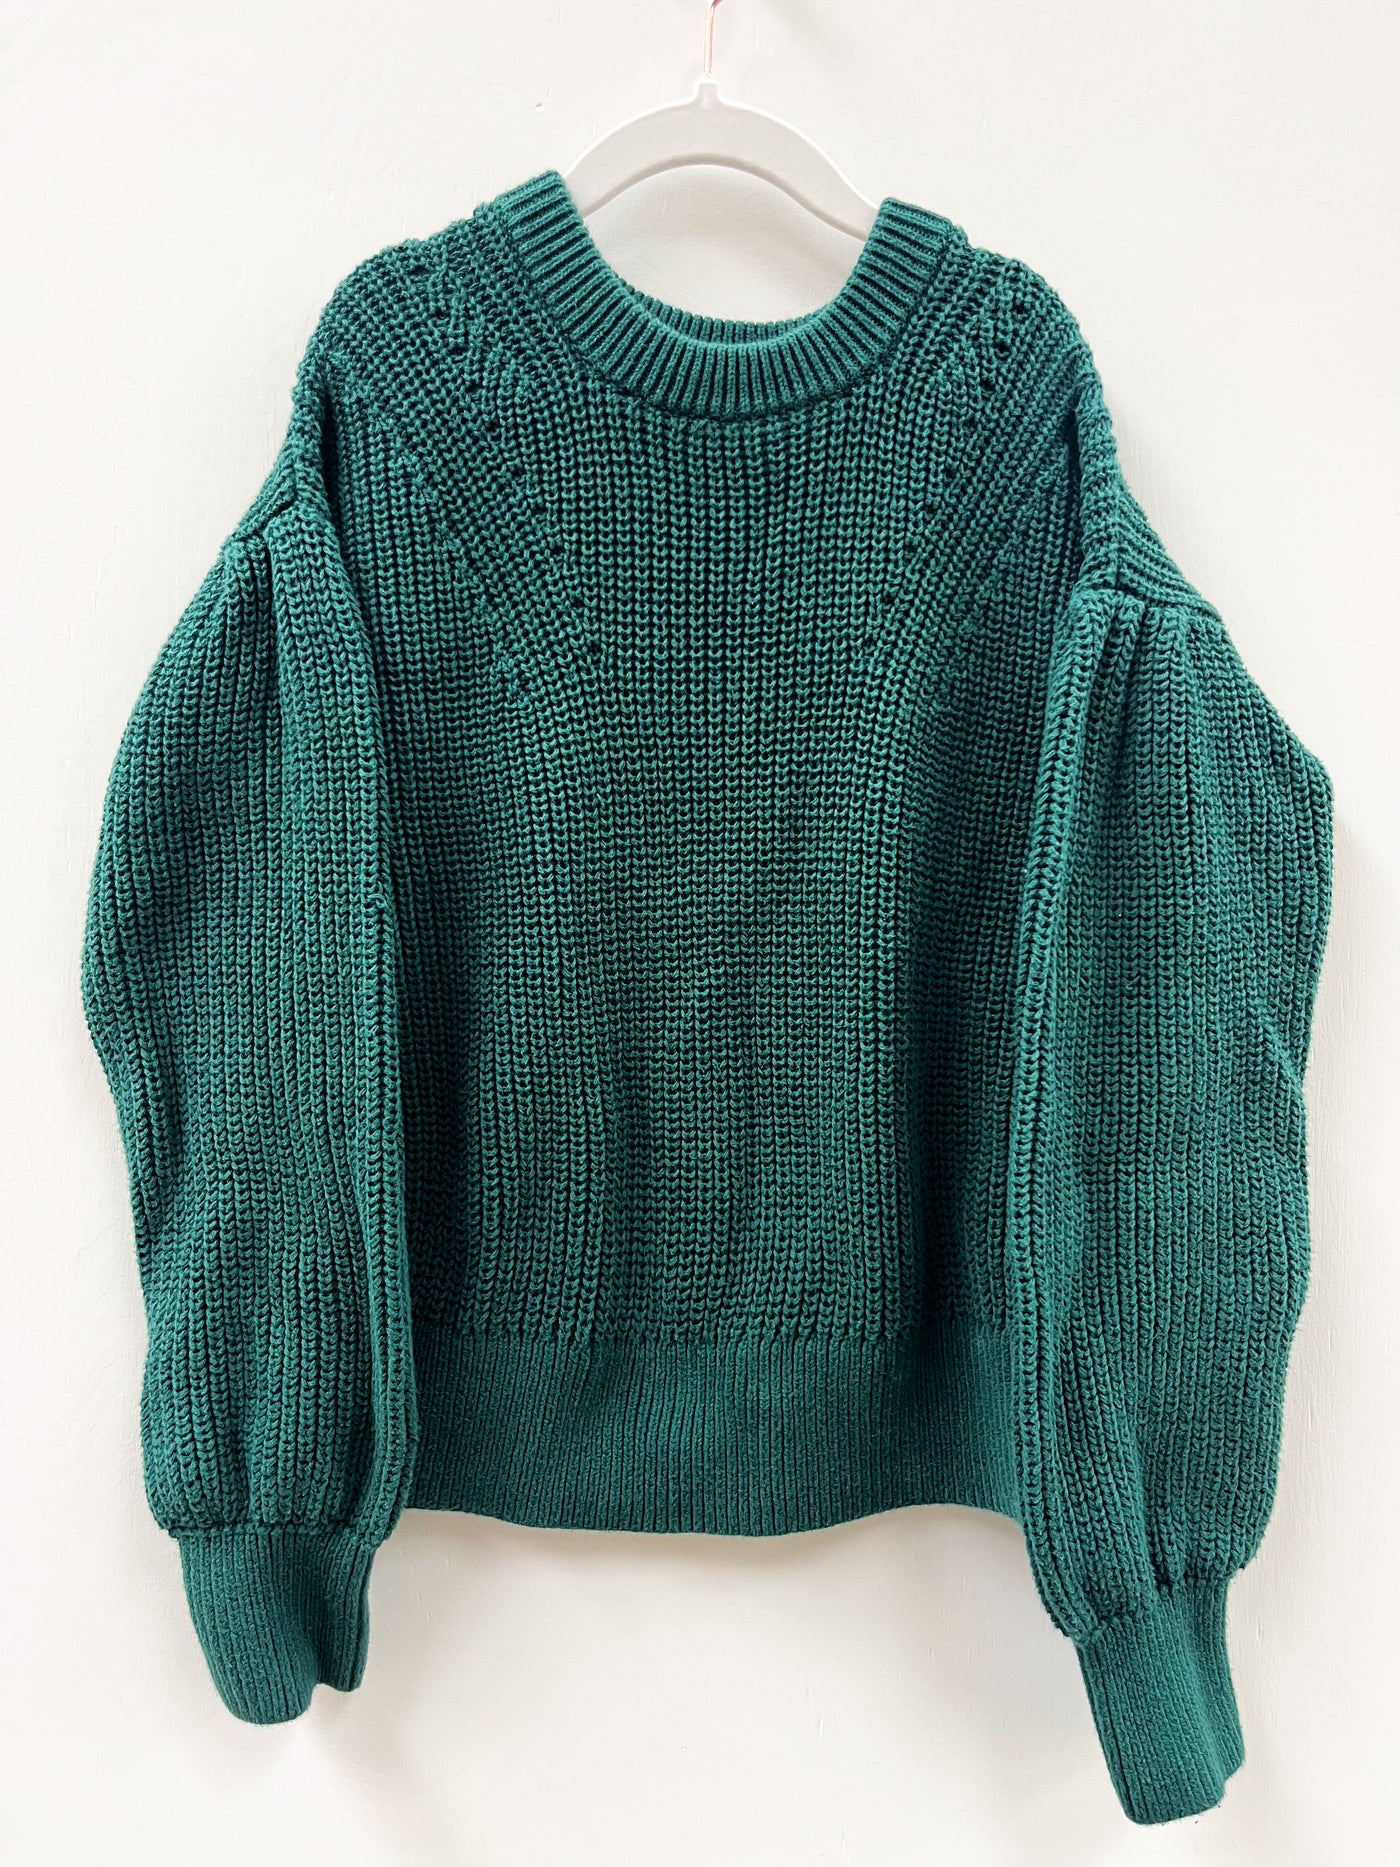 Gap Kids green sweater